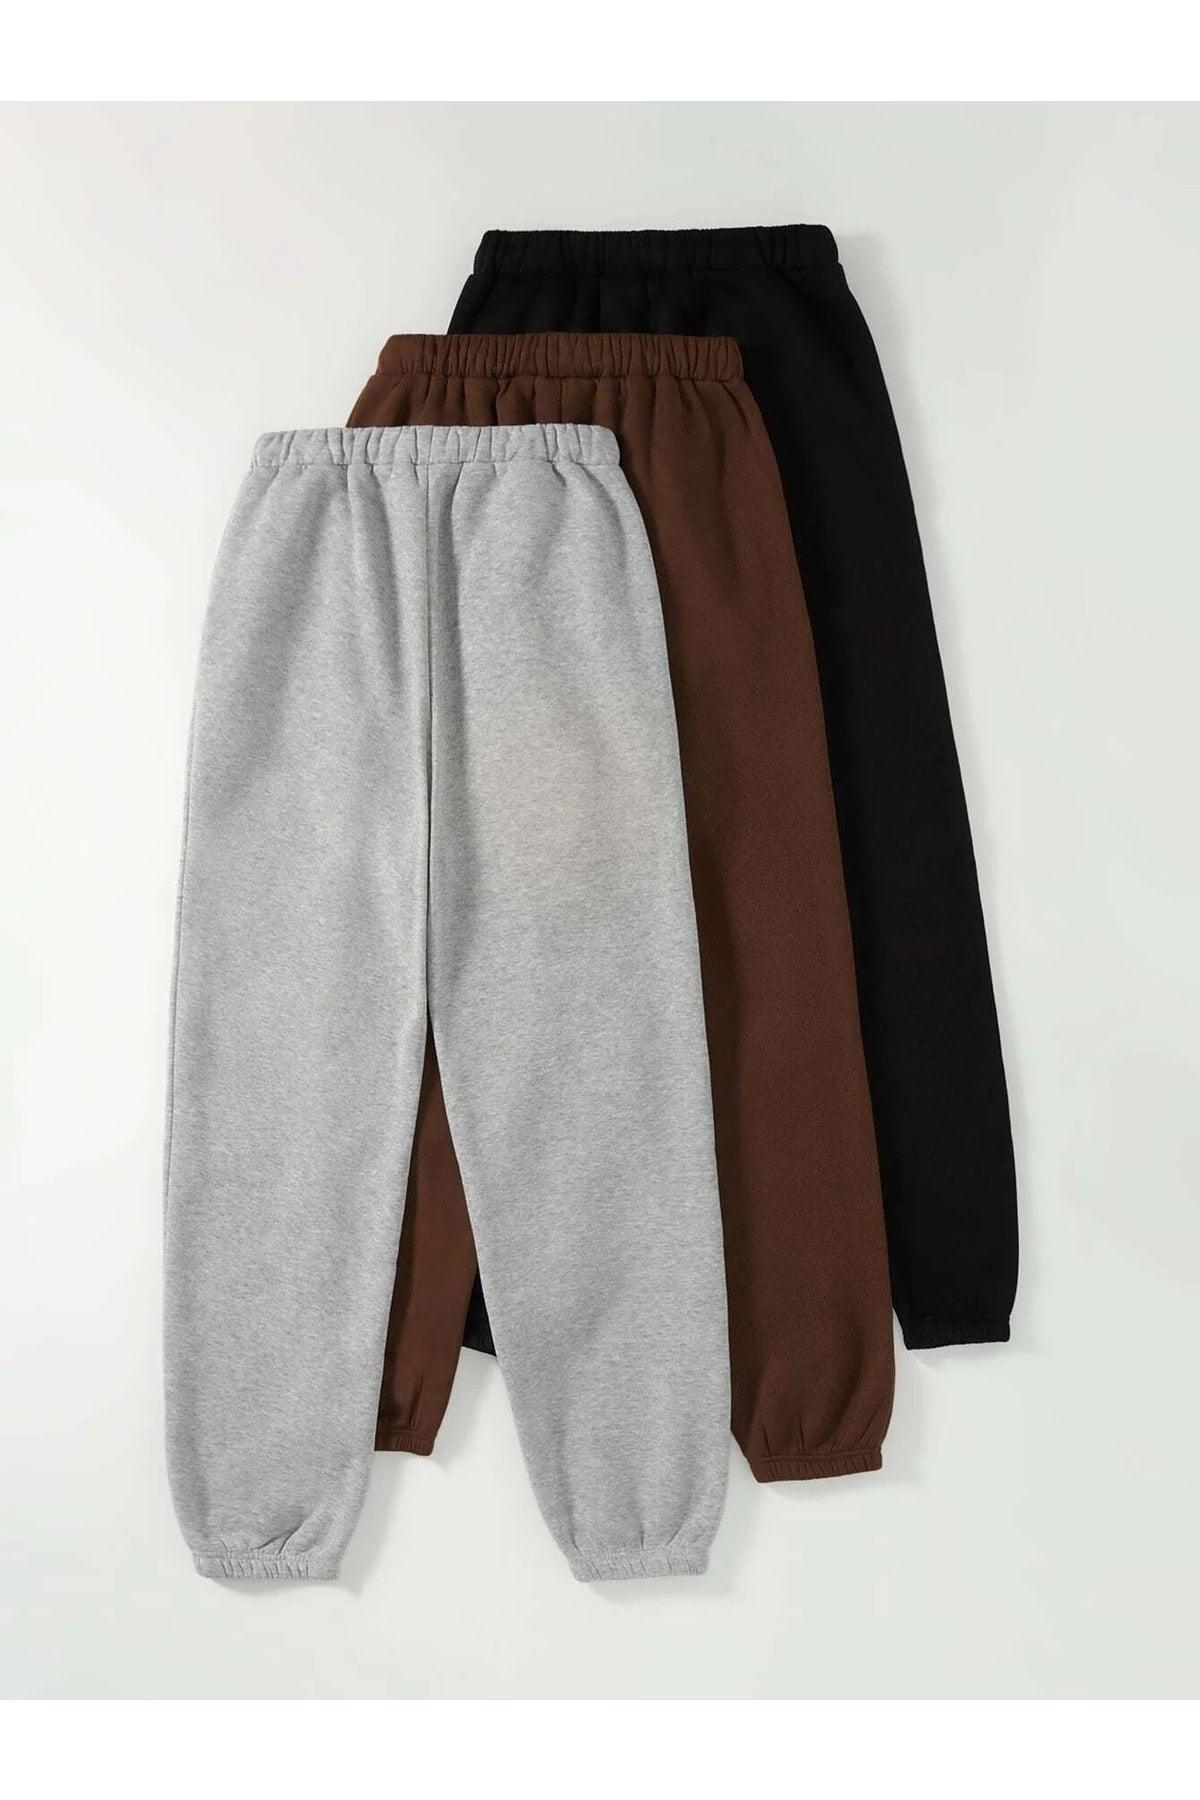 3-pack Logo Printed Jogger Sweatpants - Black, Gray And Brown, Elastic Leg, High Waist, Summer - Swordslife